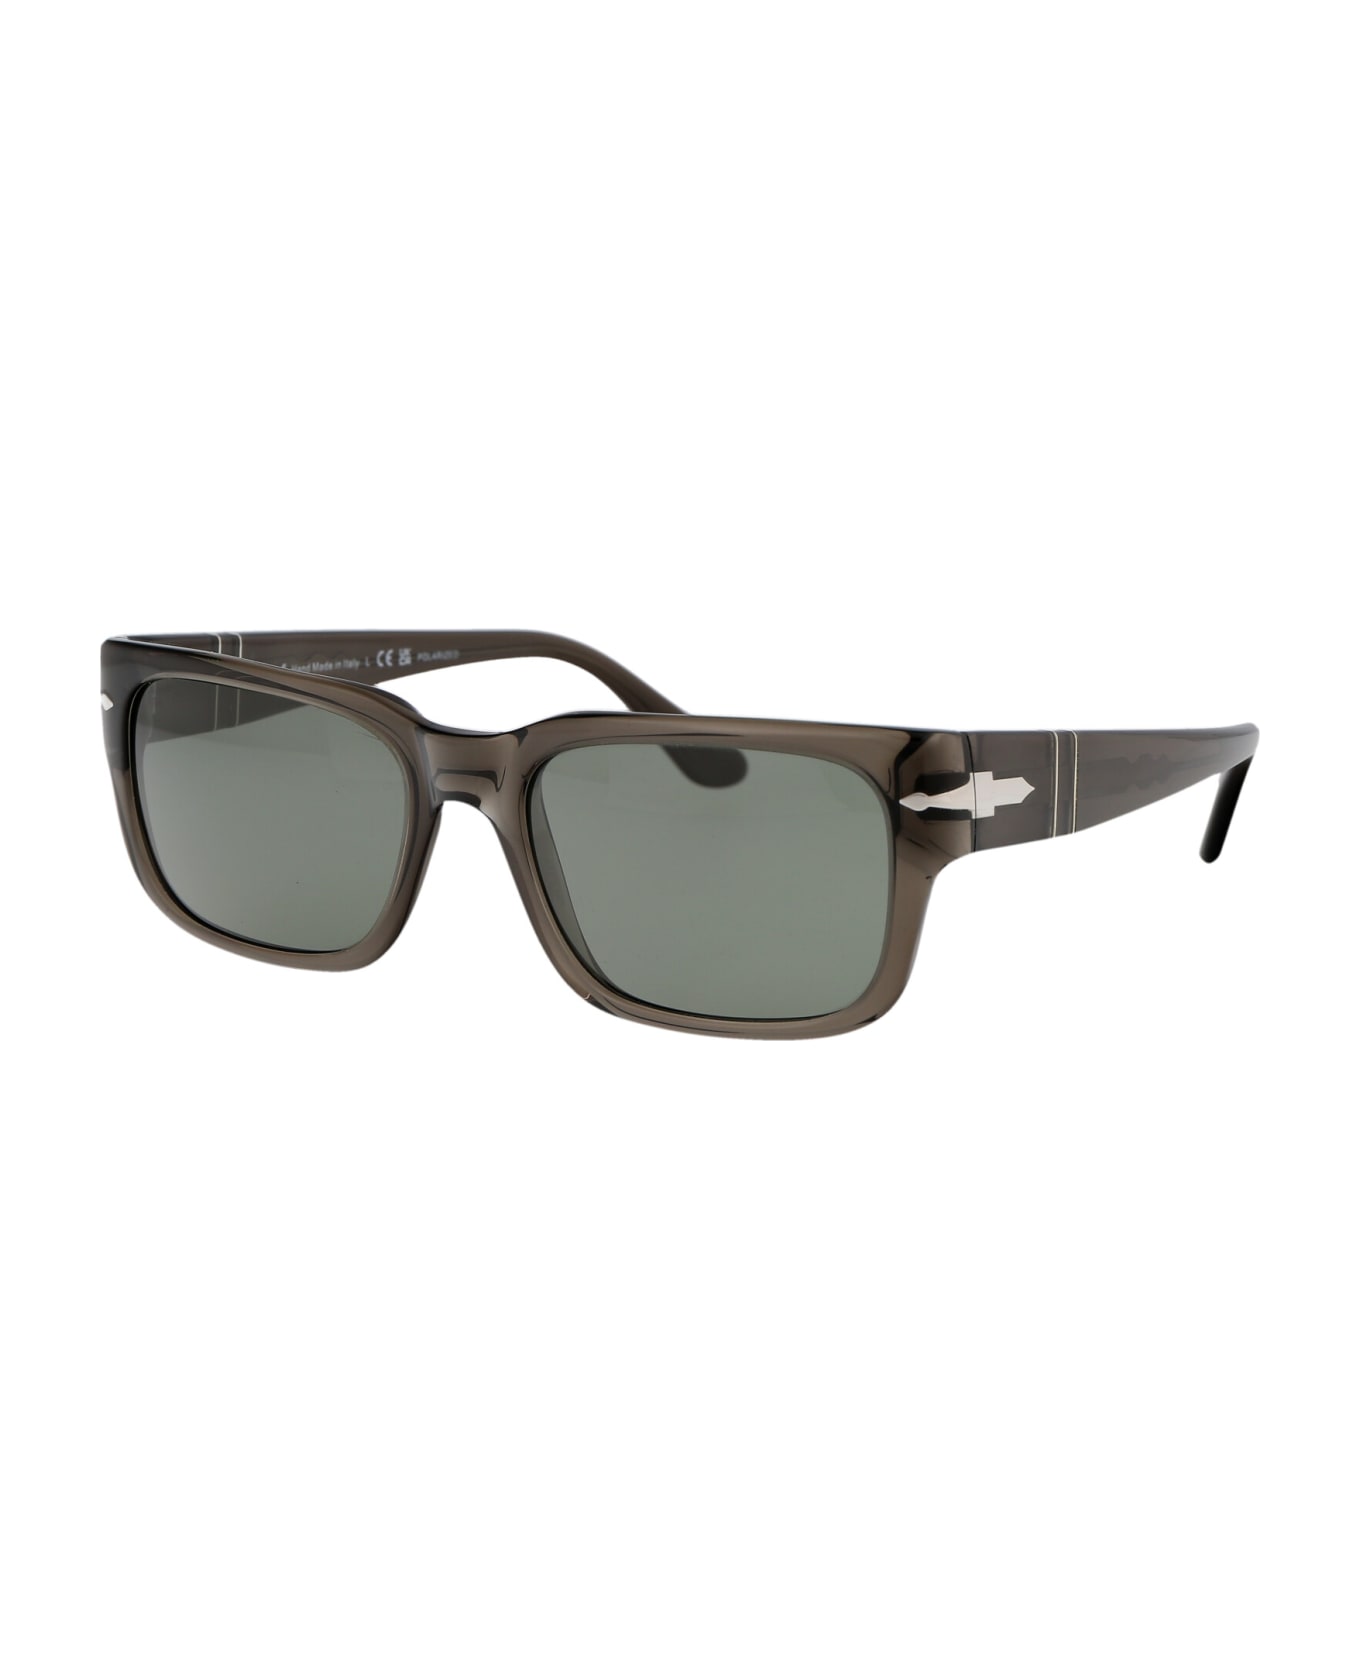 Persol 0po3315s Sunglasses - 110358 Transparent Taupe Gray